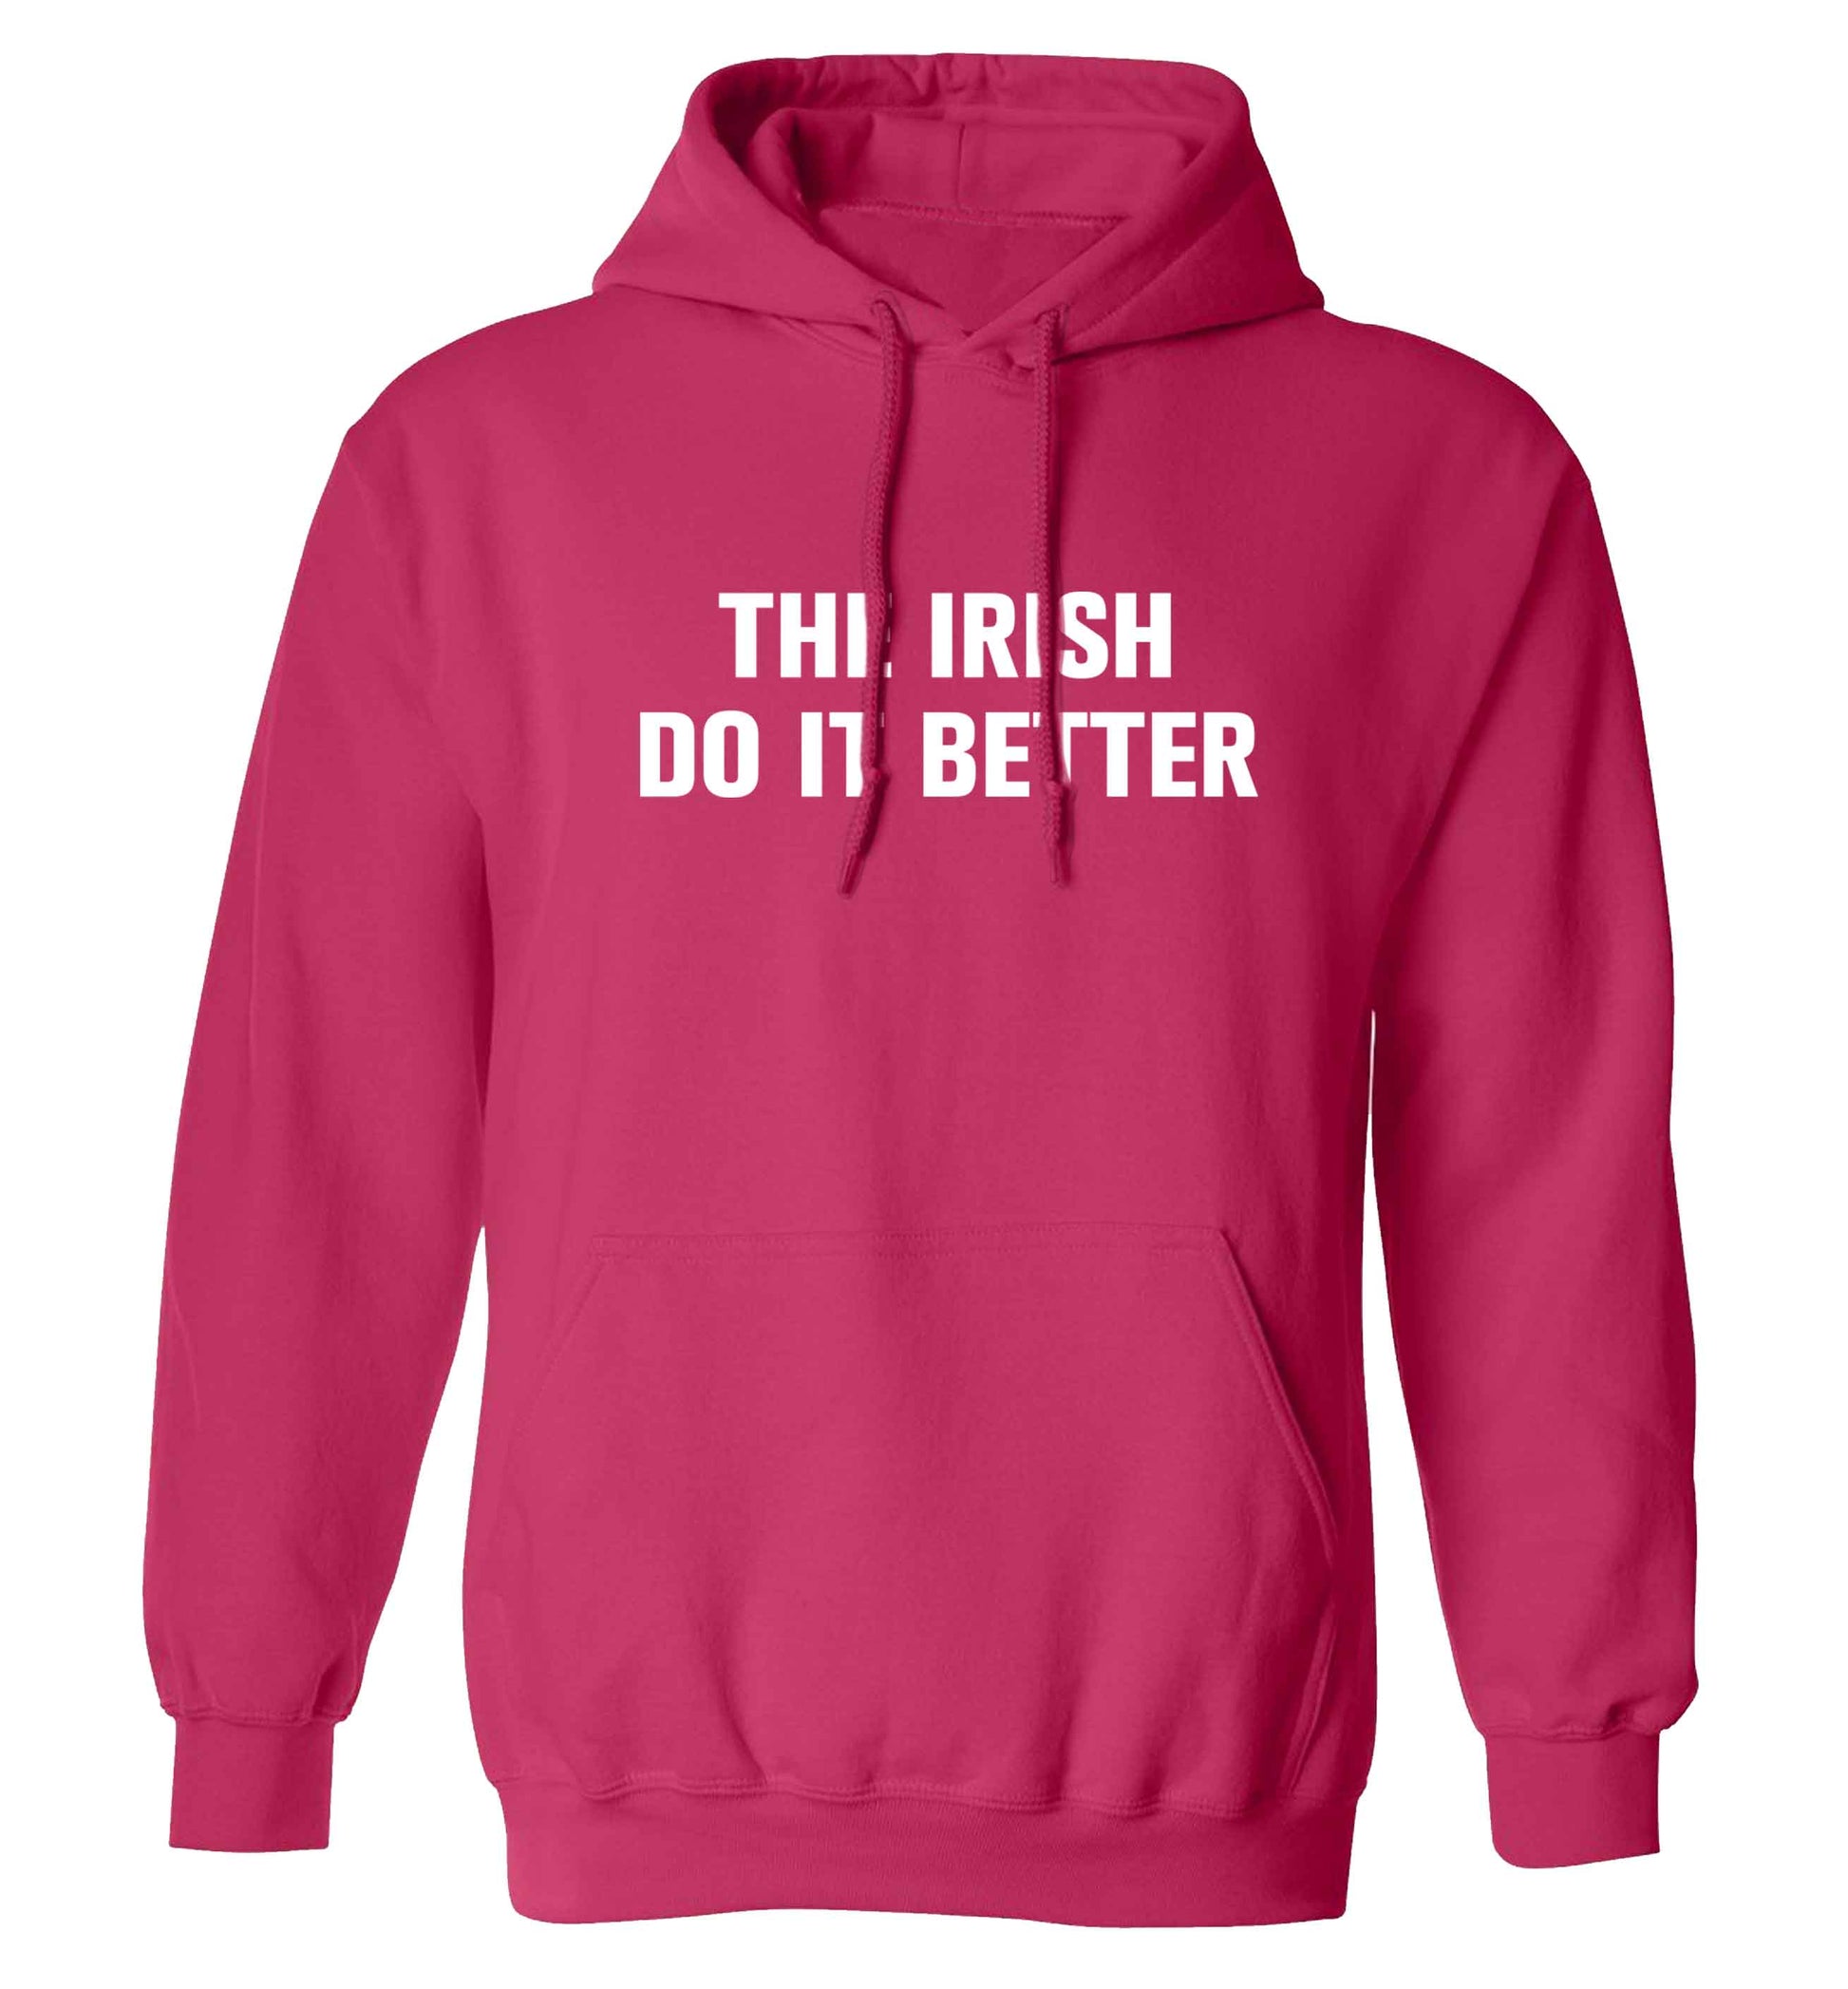 The Irish do it better adults unisex pink hoodie 2XL